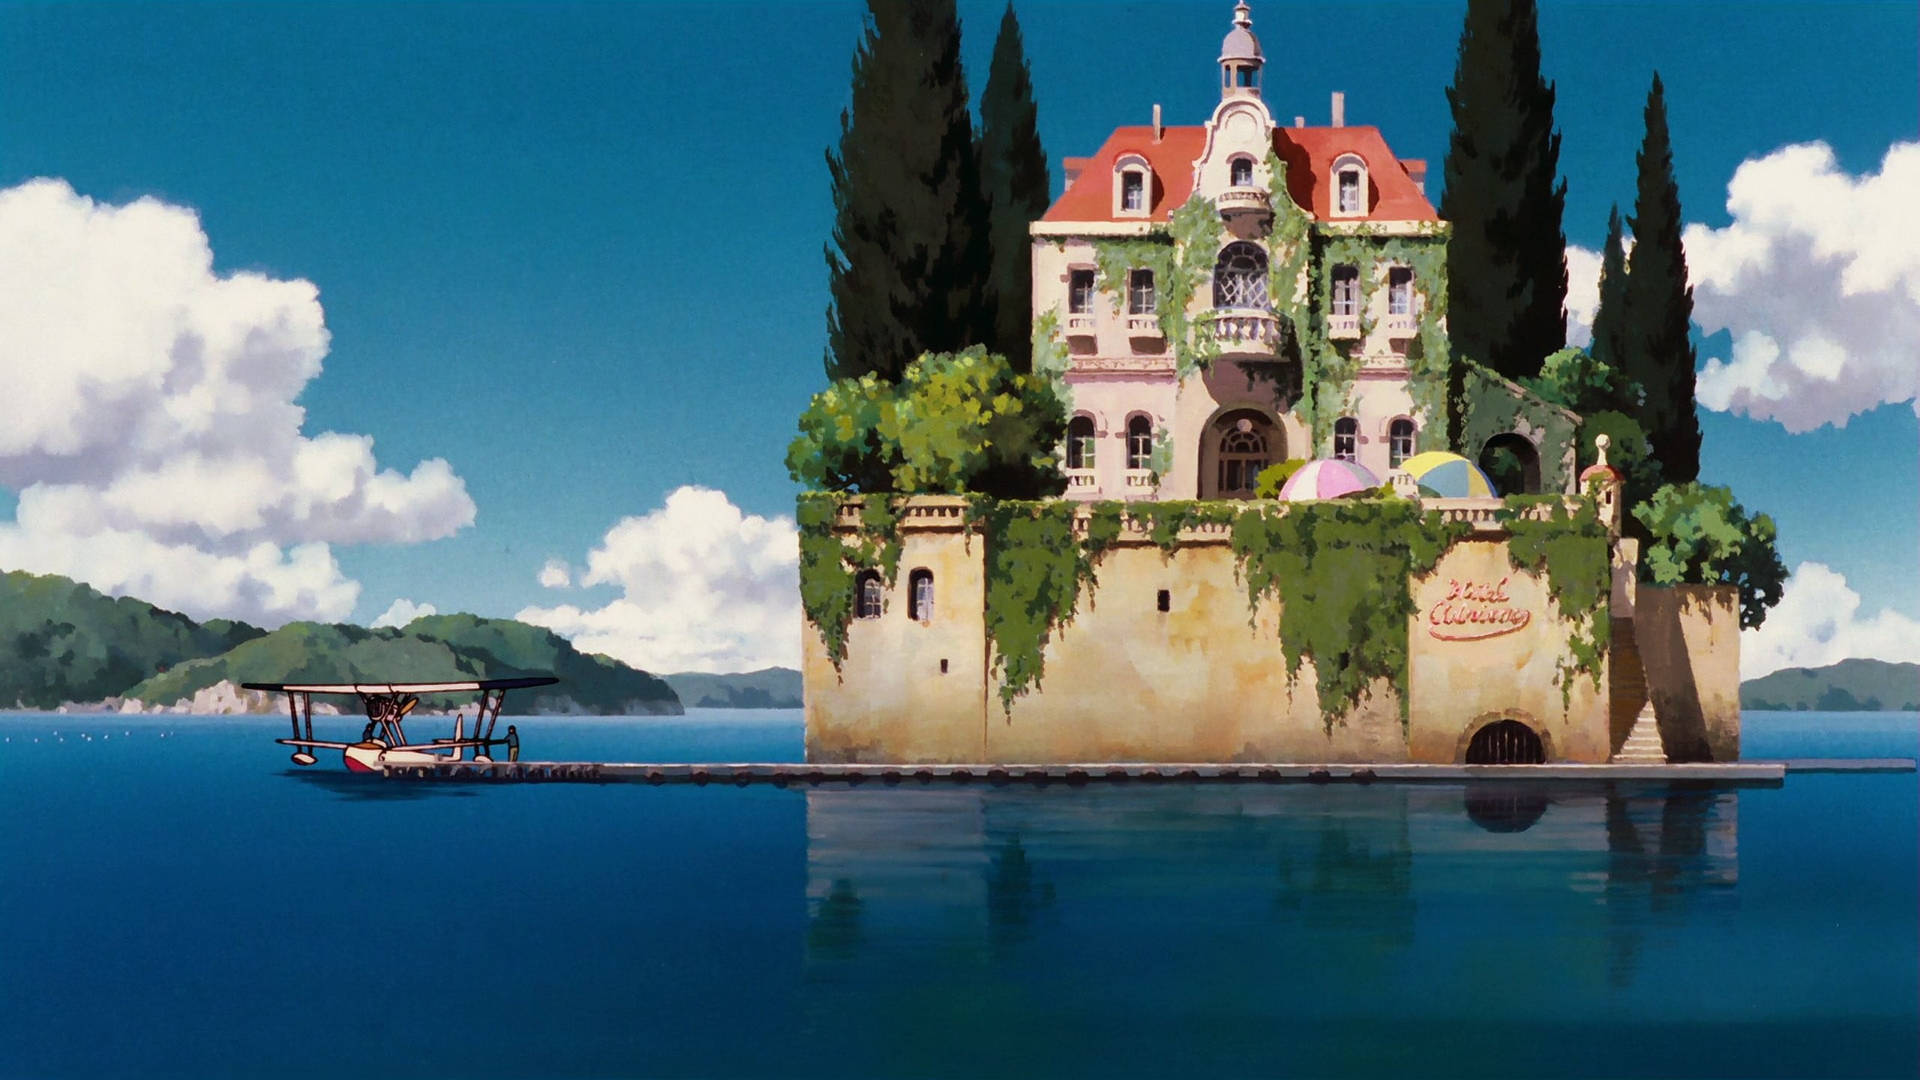 Studio Ghibli Scenery With Seaplane